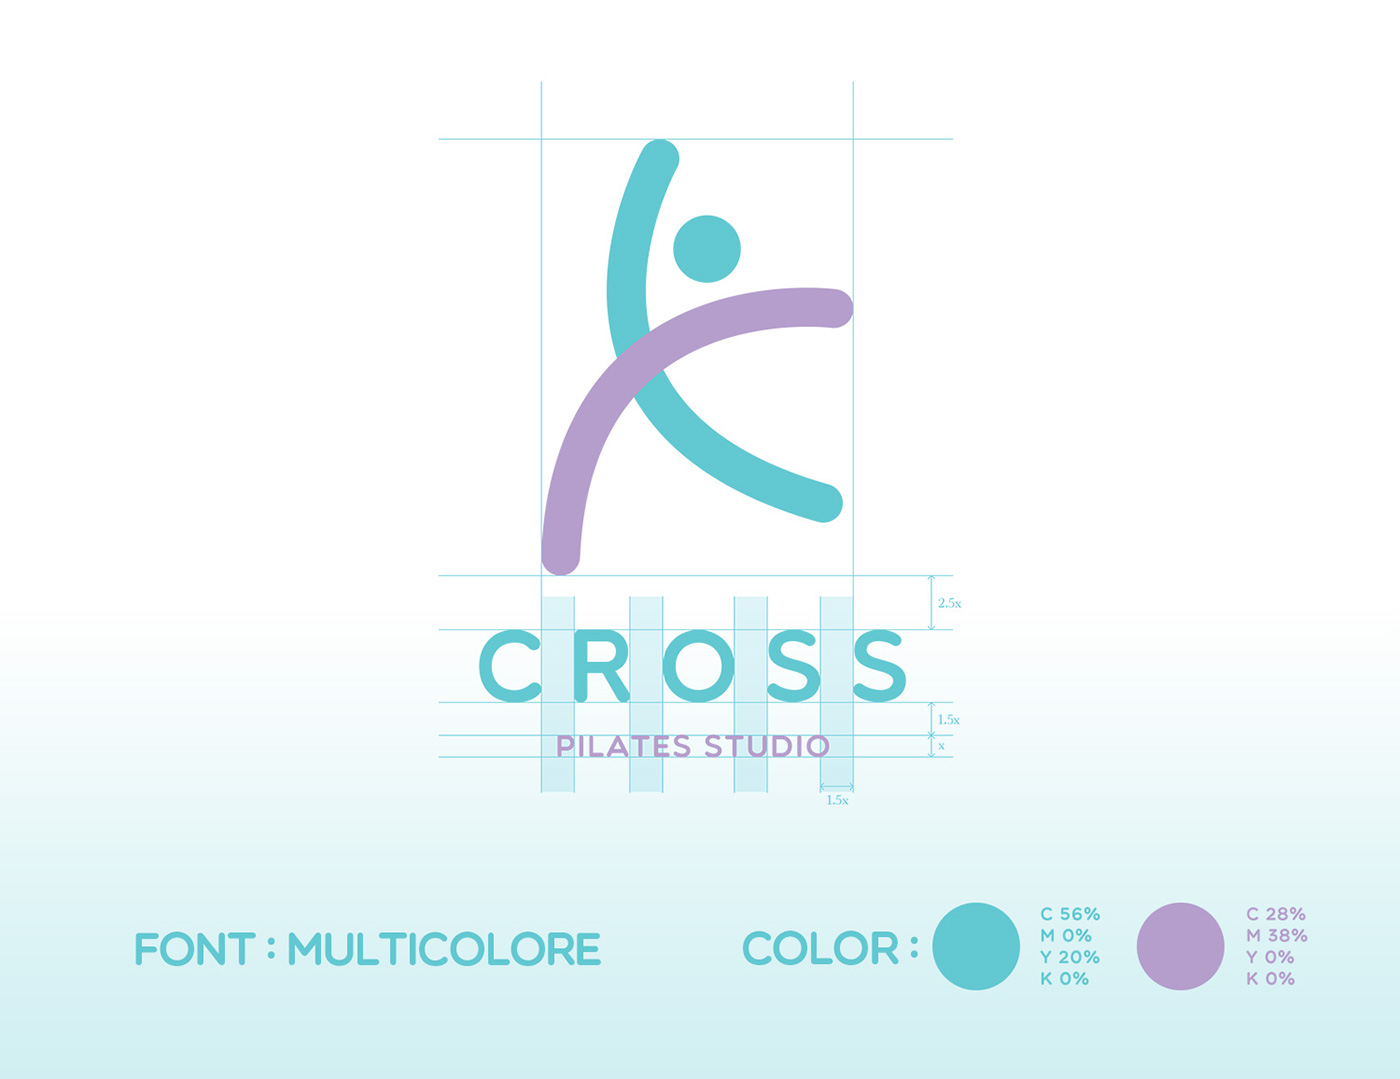 Pilates studio design logo +branding+